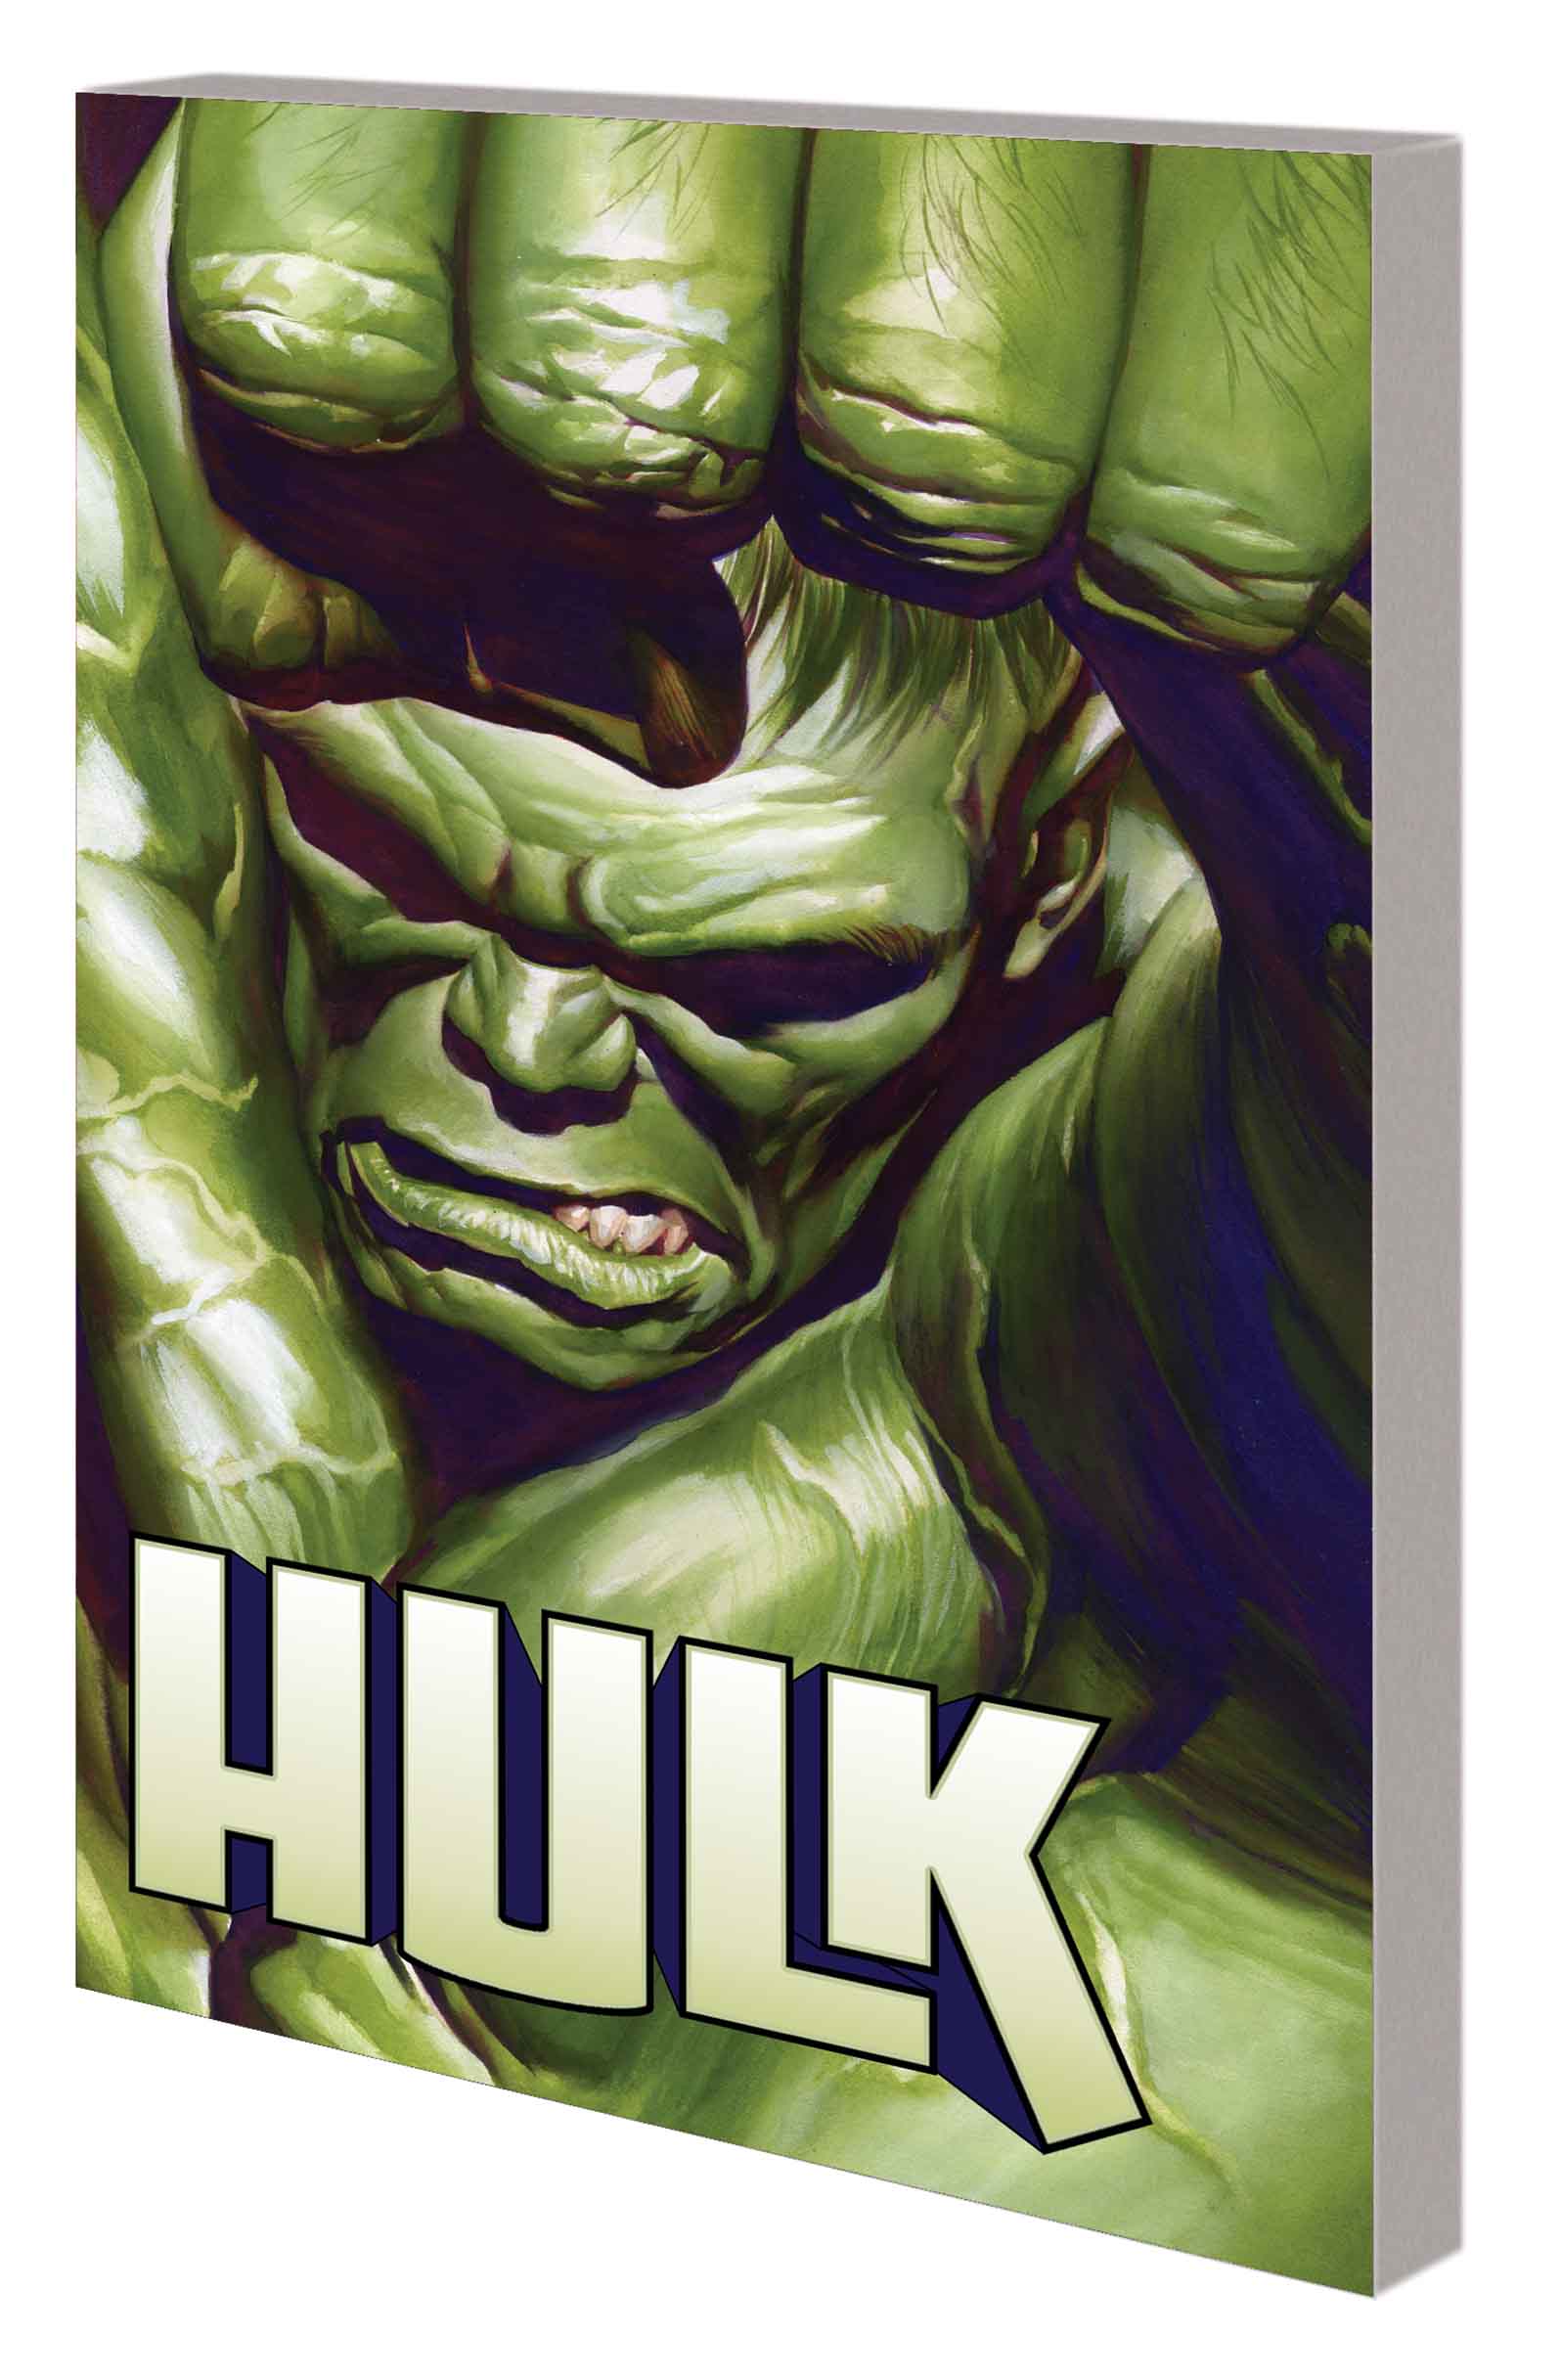 Hulk Vol. 2: Omega Hulk Book 1 (Trade Paperback)